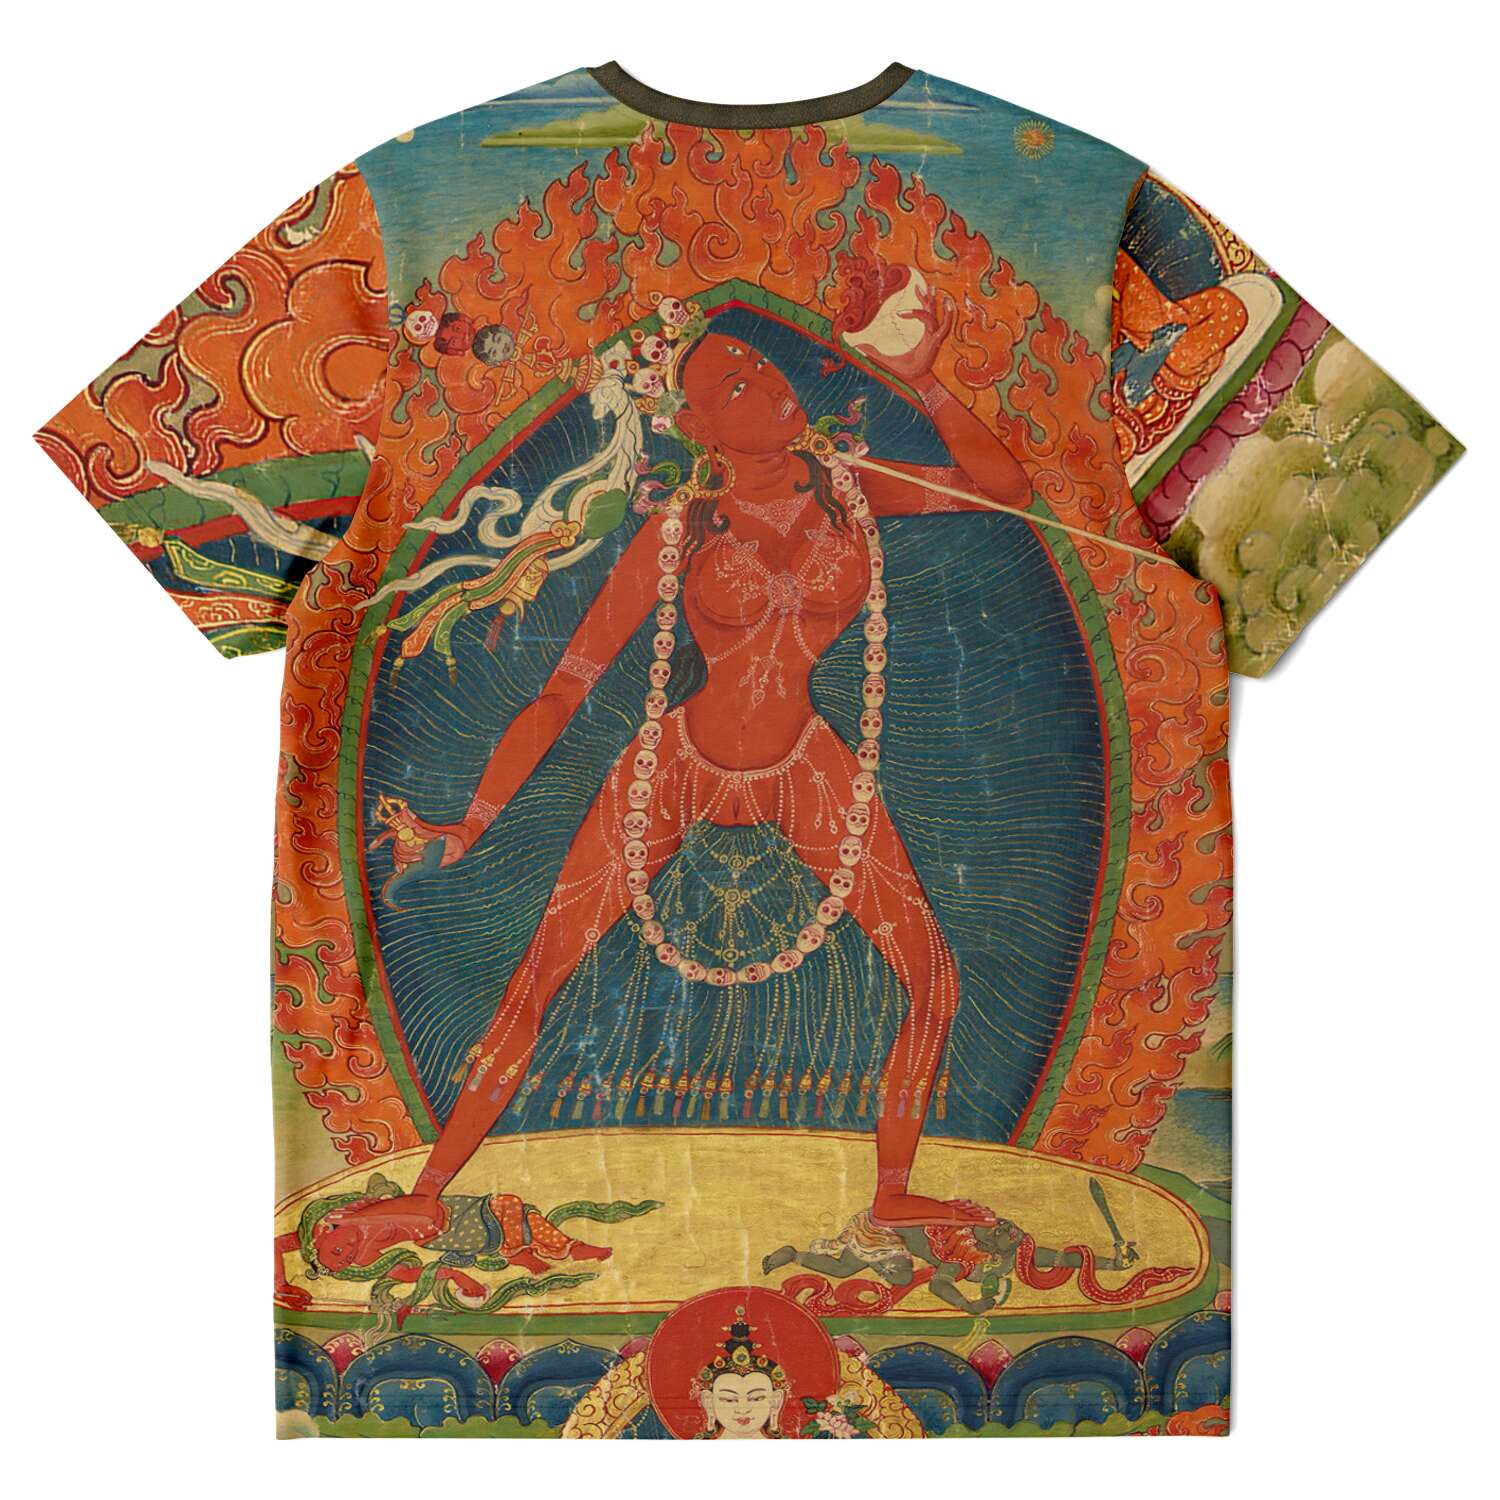 T-shirt XS Vajrayogini Tibetan Vajrayana Thangka Erotic Tantric Tantra Deity Goddess Feminist Buddhist Mahayana Vintage Antique Art T-Shirt Tee